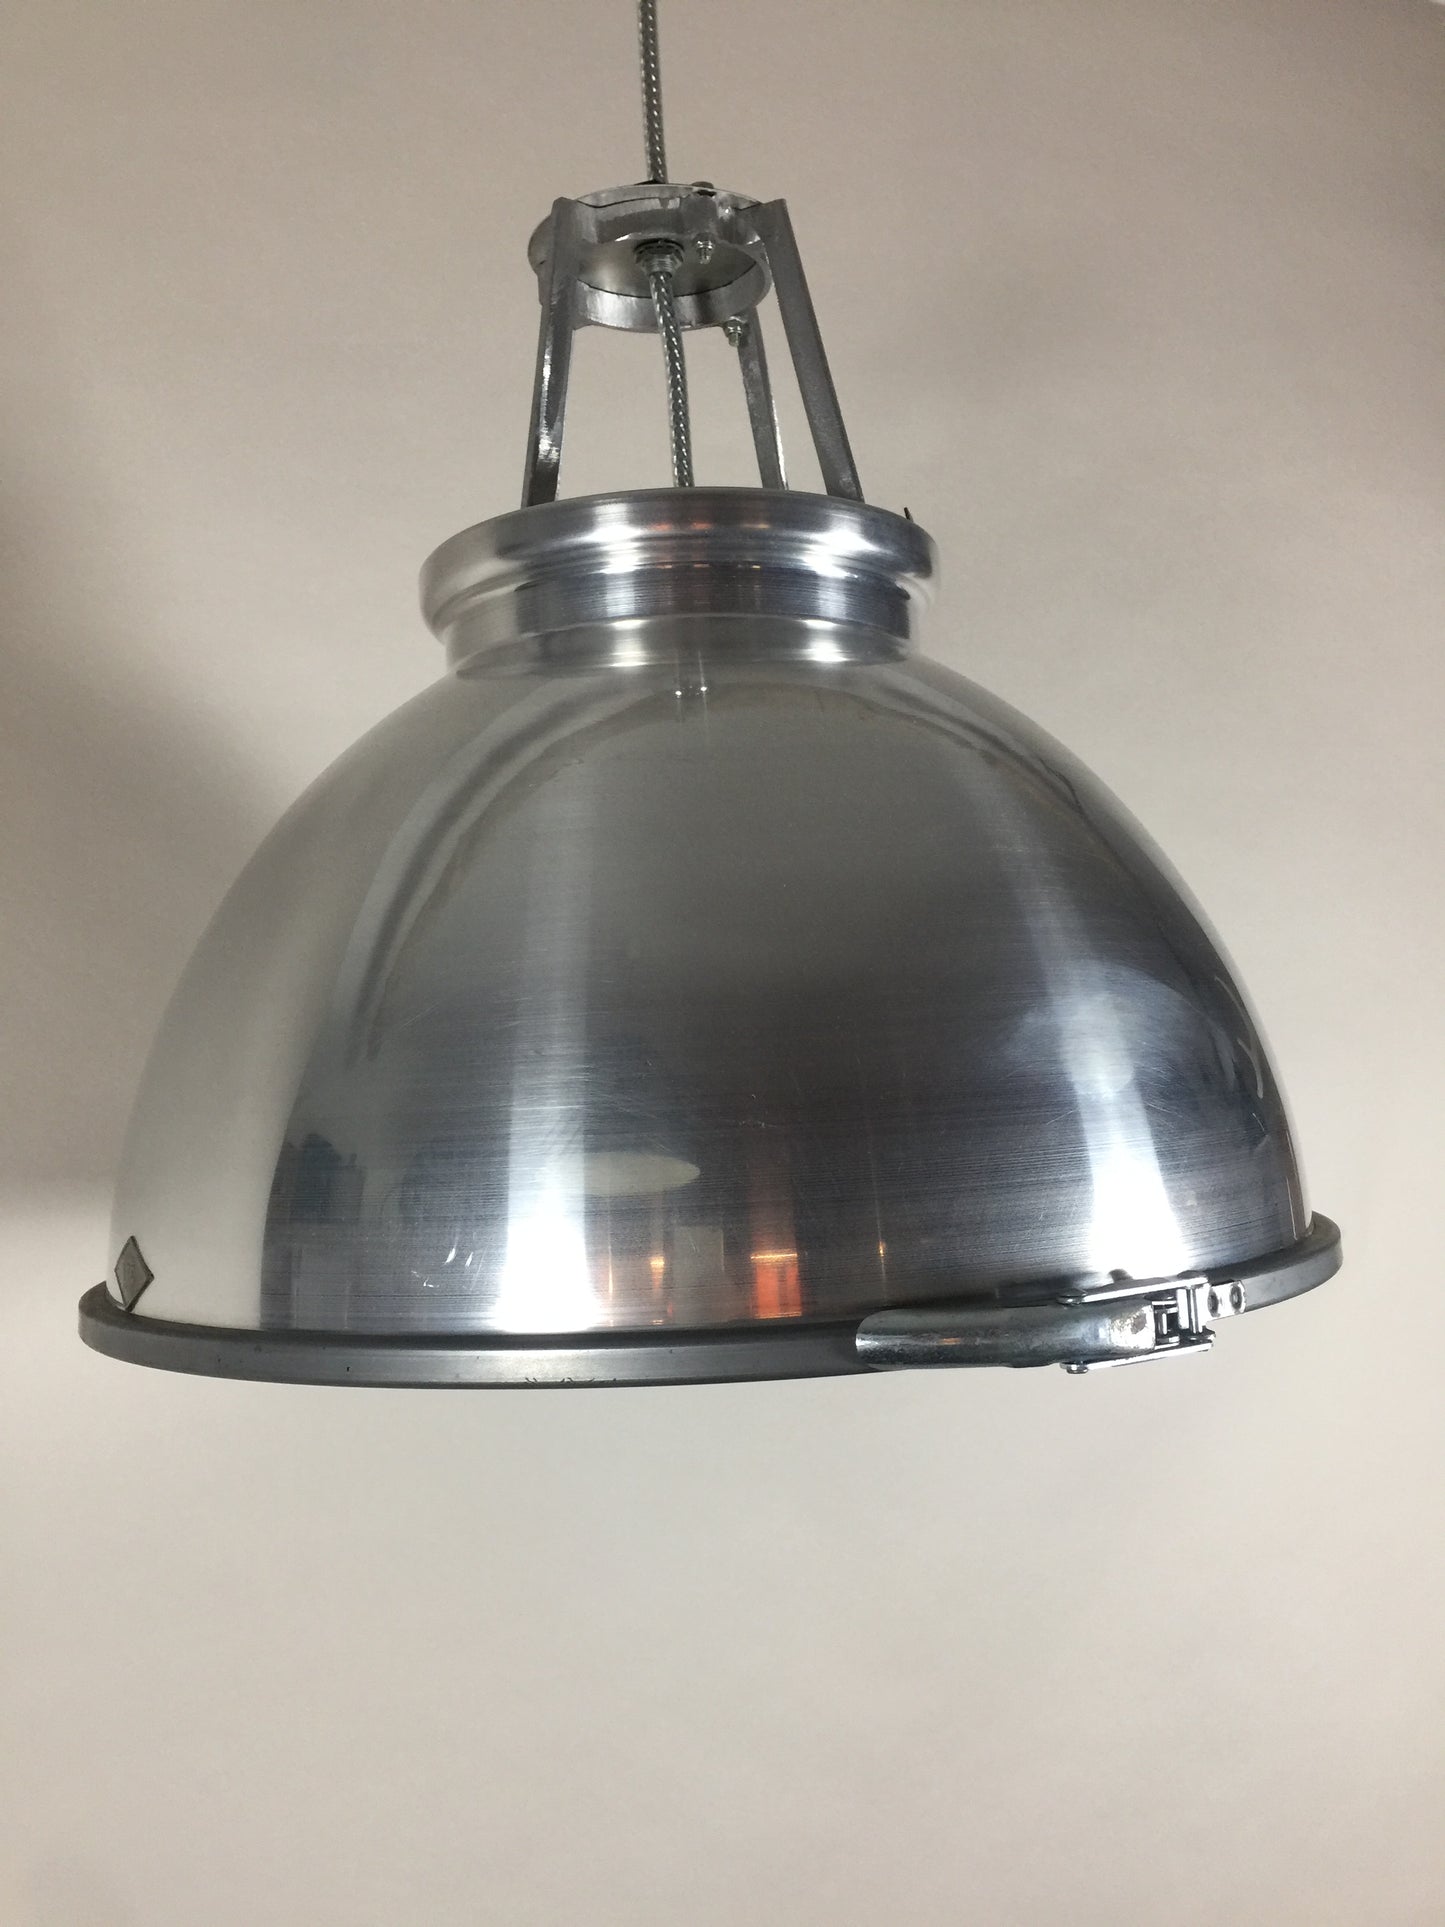 Original BTC lampa - Titan med trådglas